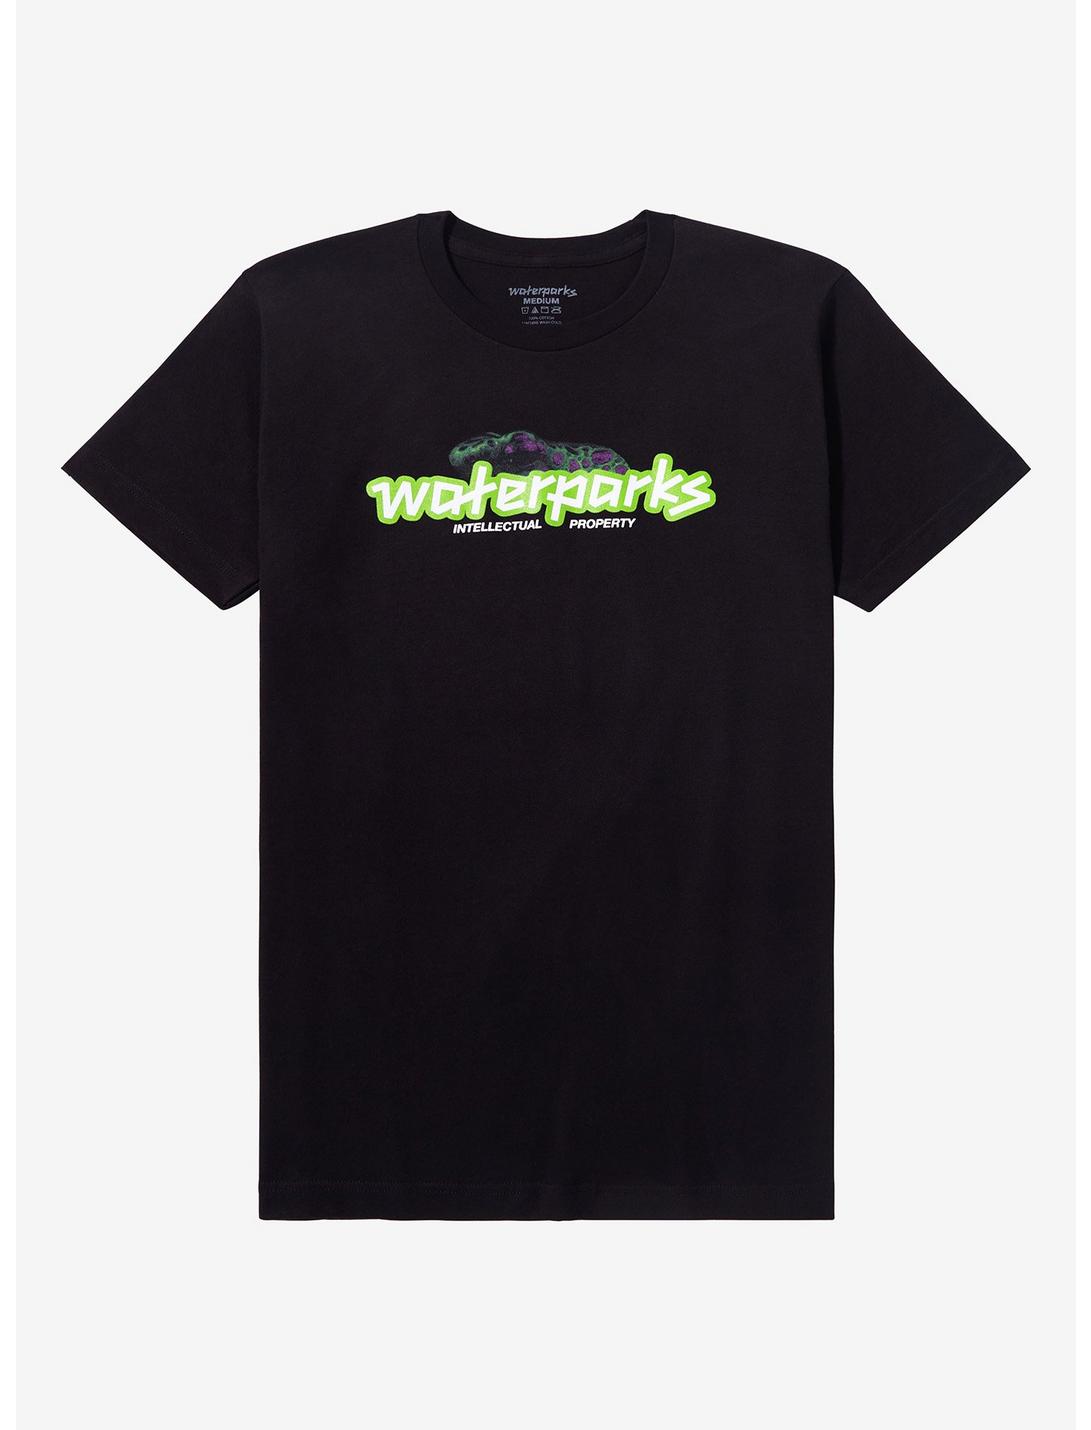 Waterparks Intellectual Property Frog T-Shirt, BLACK, hi-res